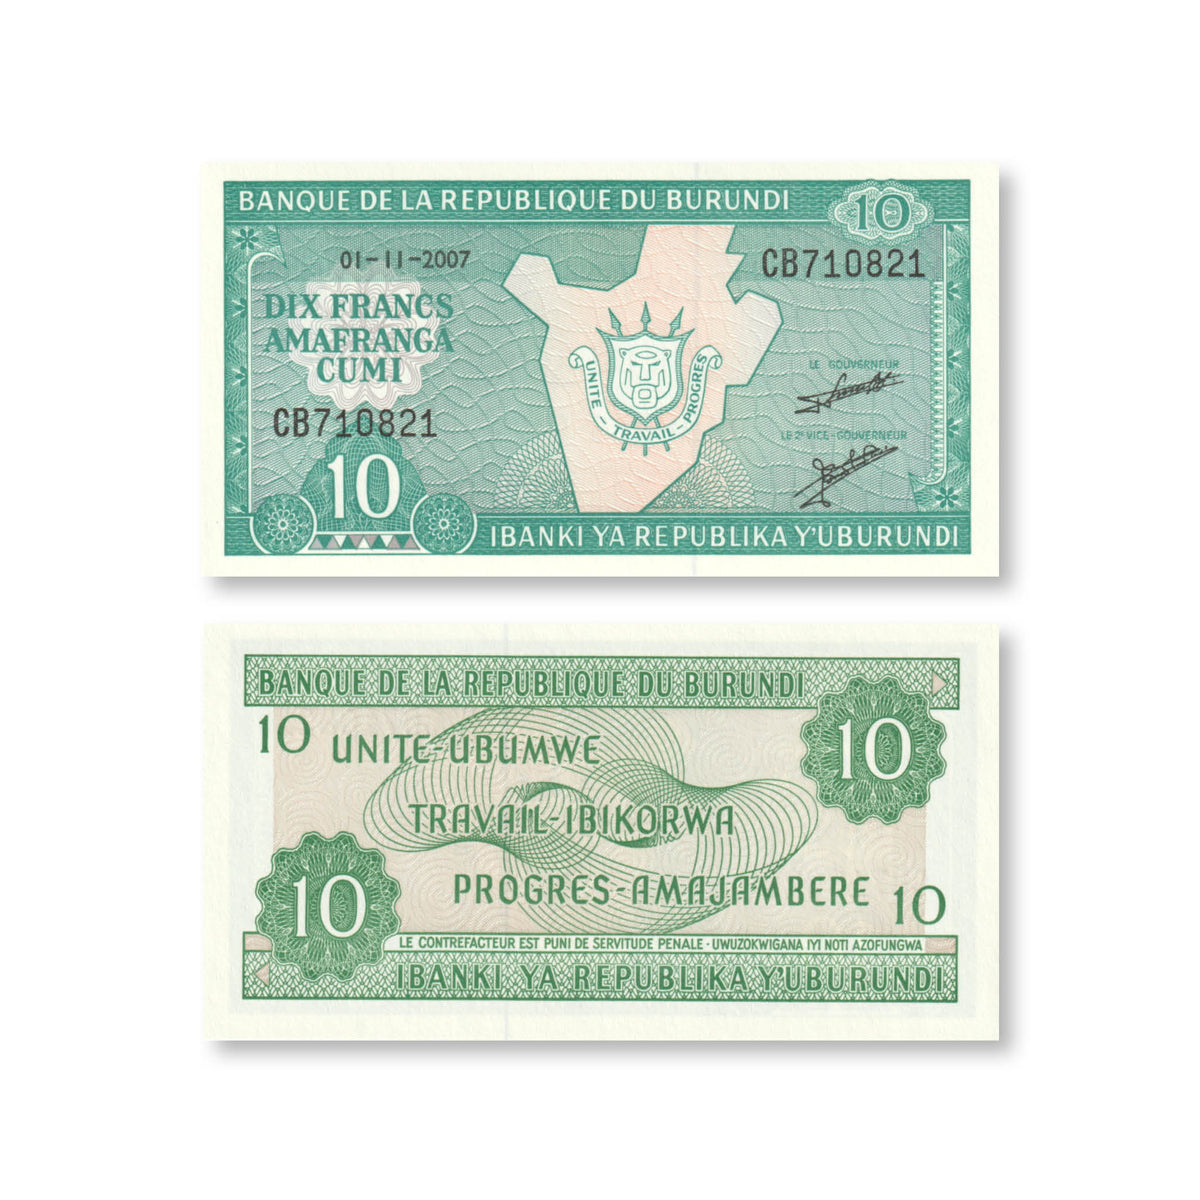 Burundi 10 Francs, 2007, B214l, P33e, UNC - Robert's World Money - World Banknotes